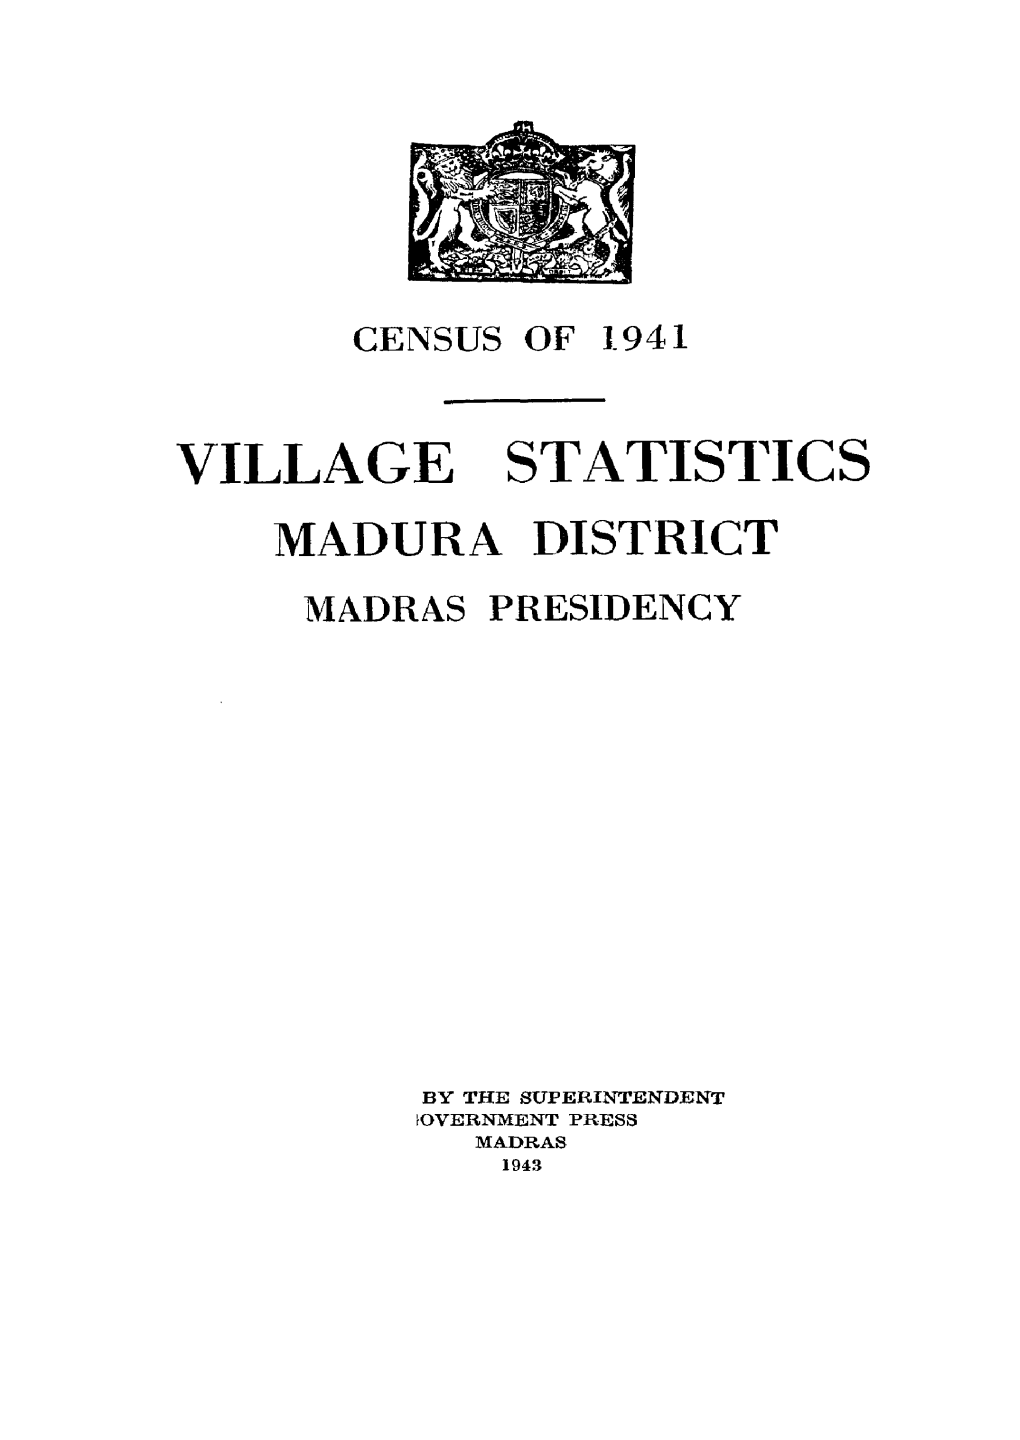 Village Statistics Madura District